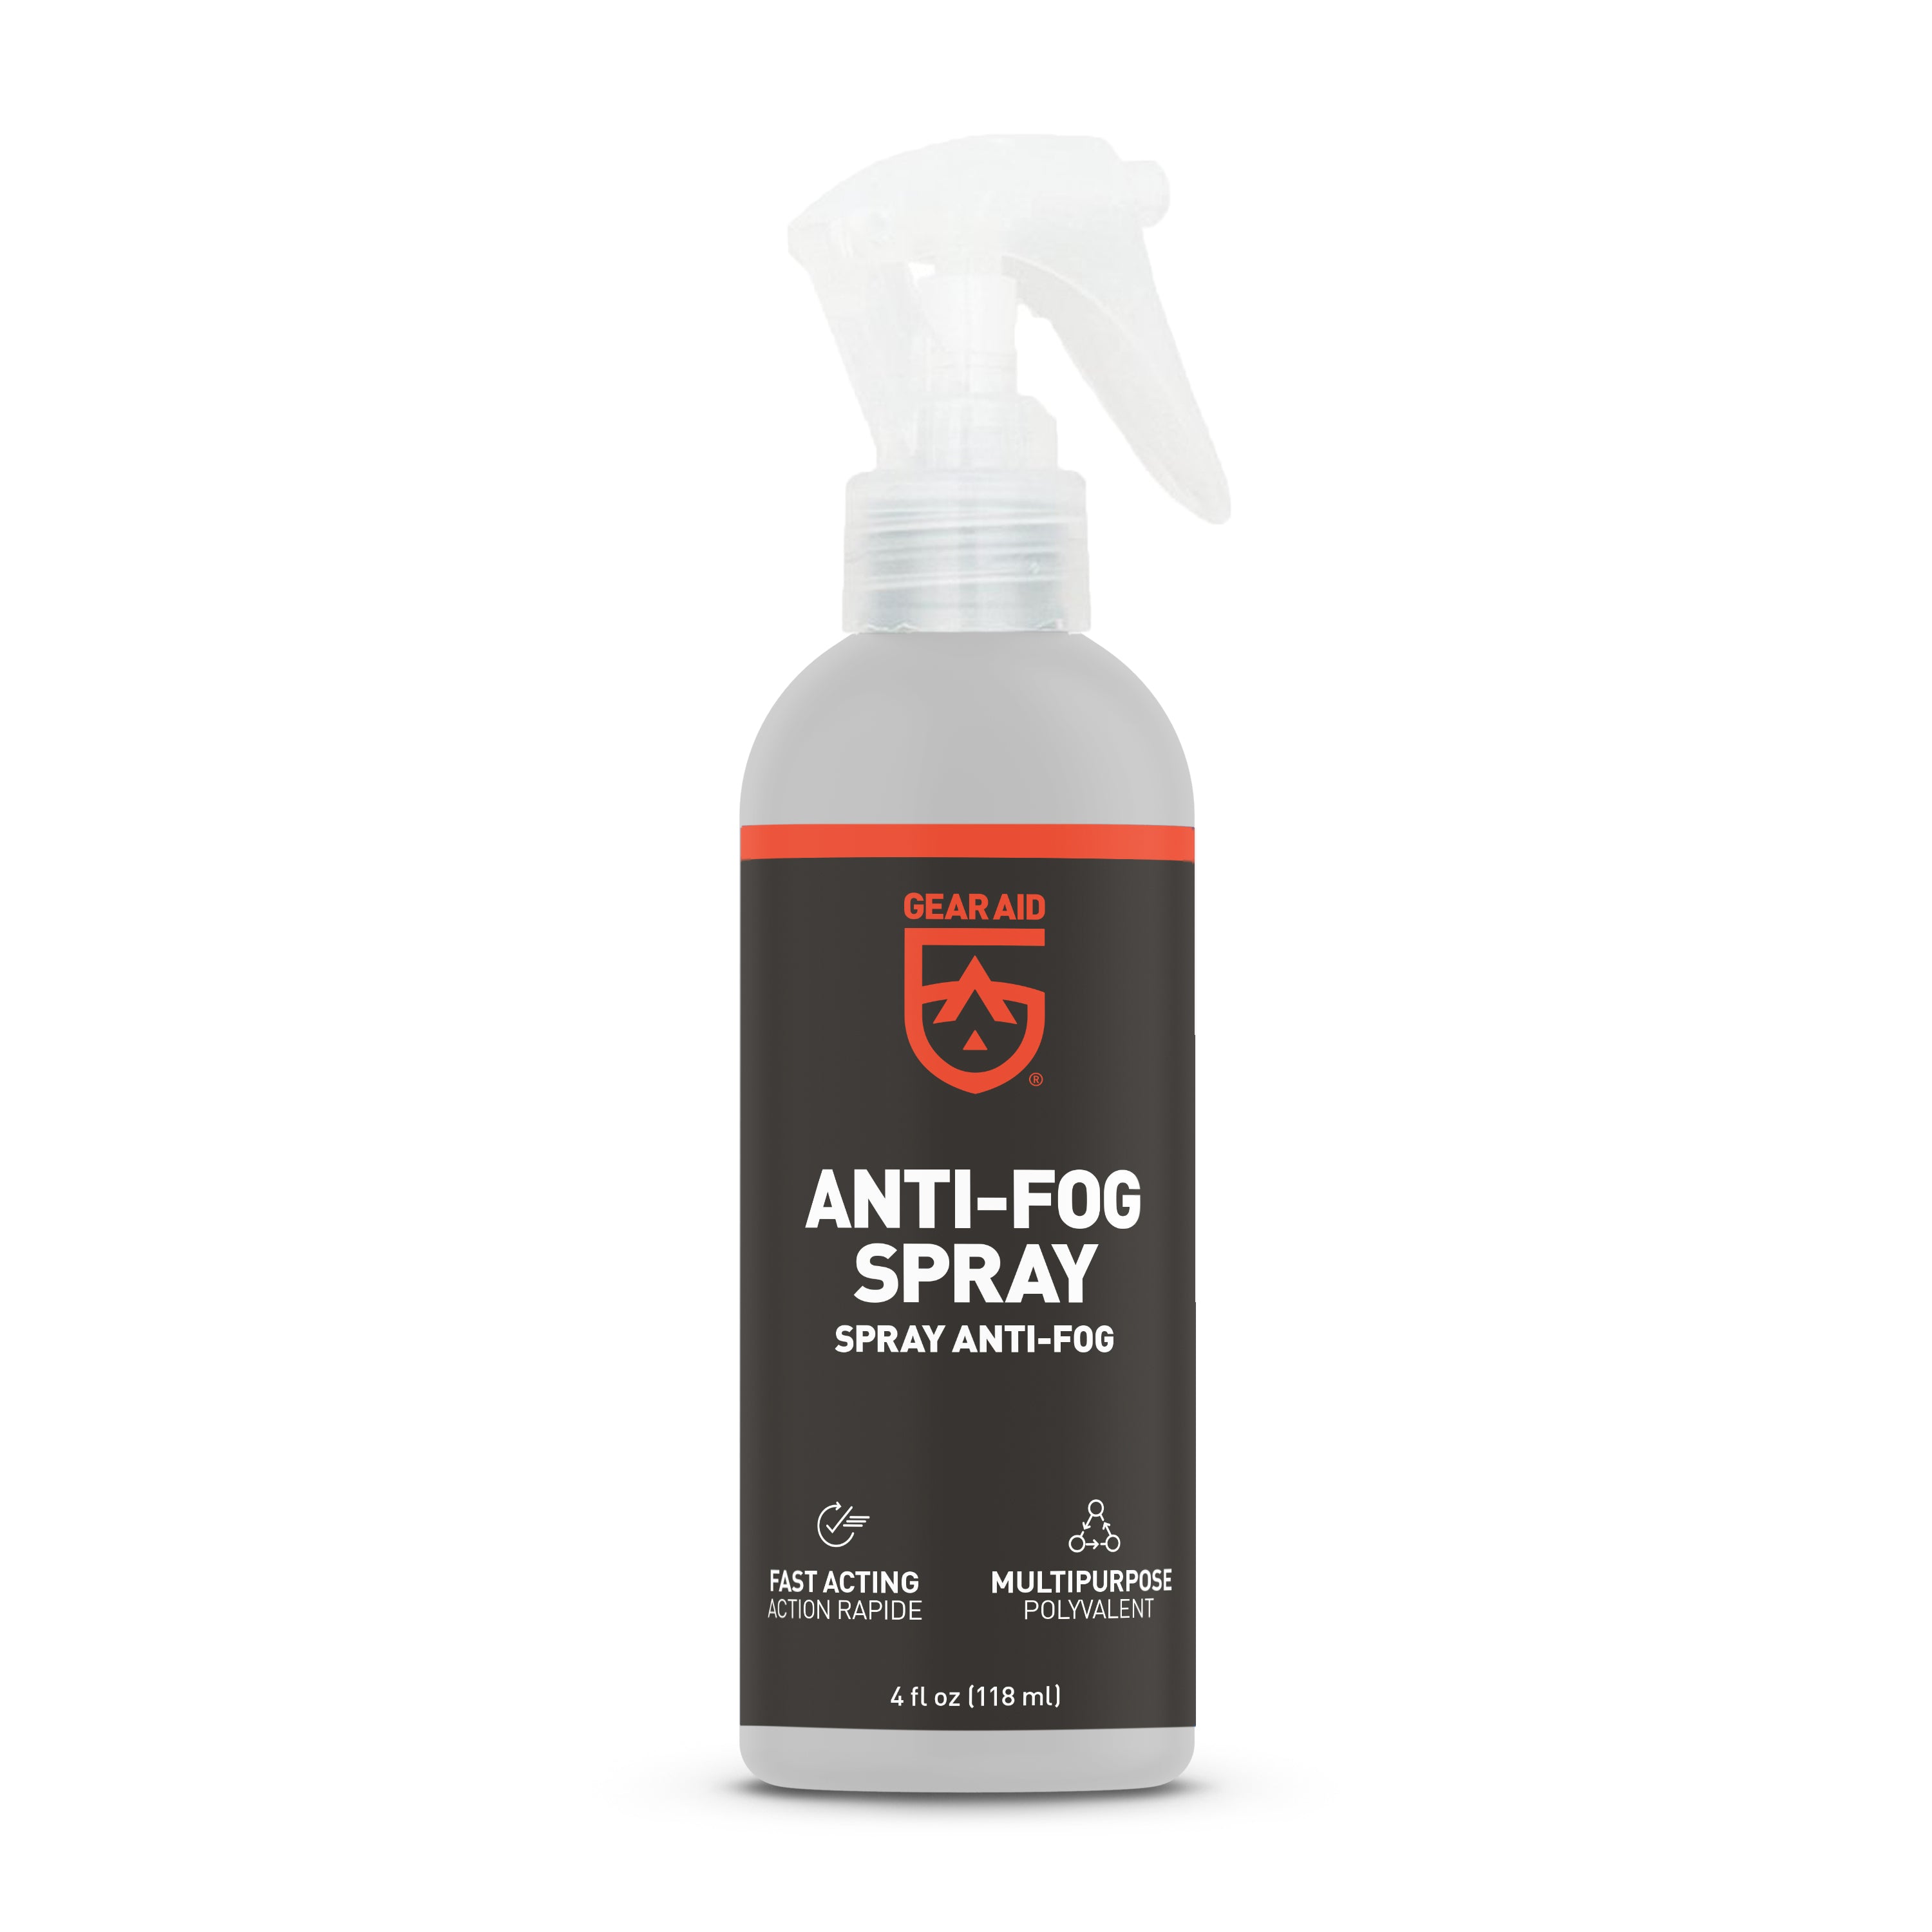 Panoptx Antifog Spray Bottle